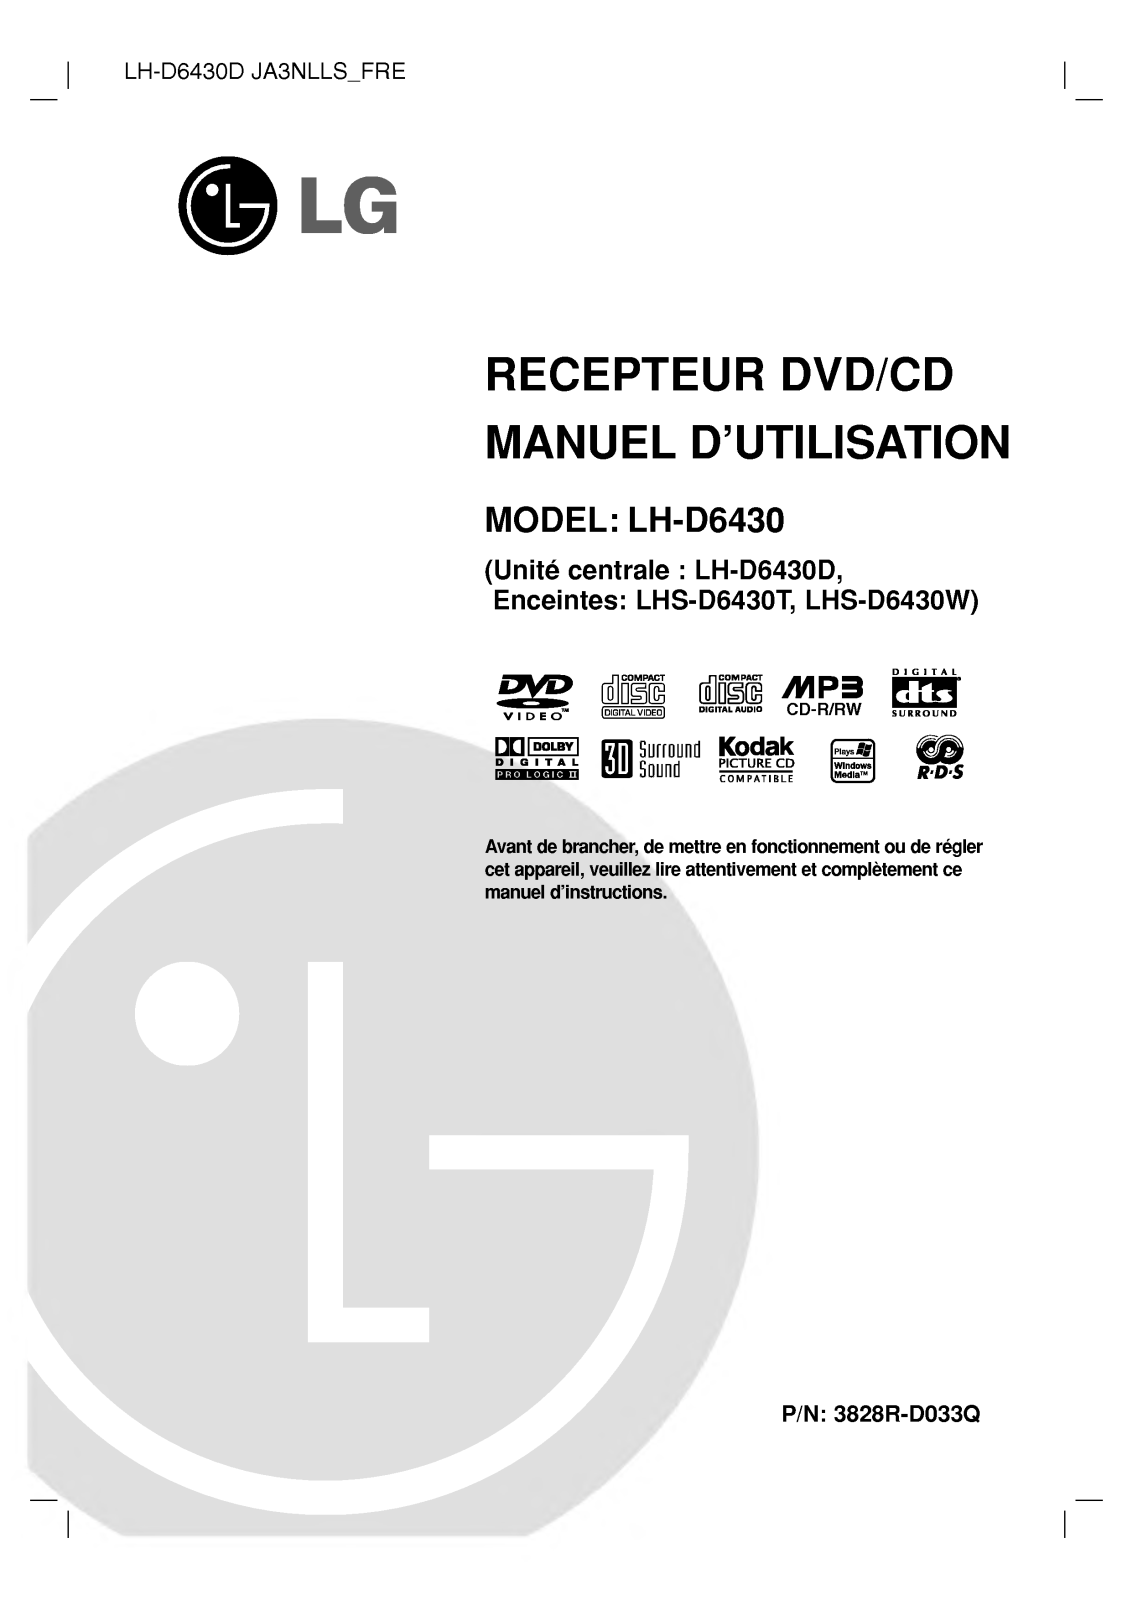 LG LH-D6430D User Manual